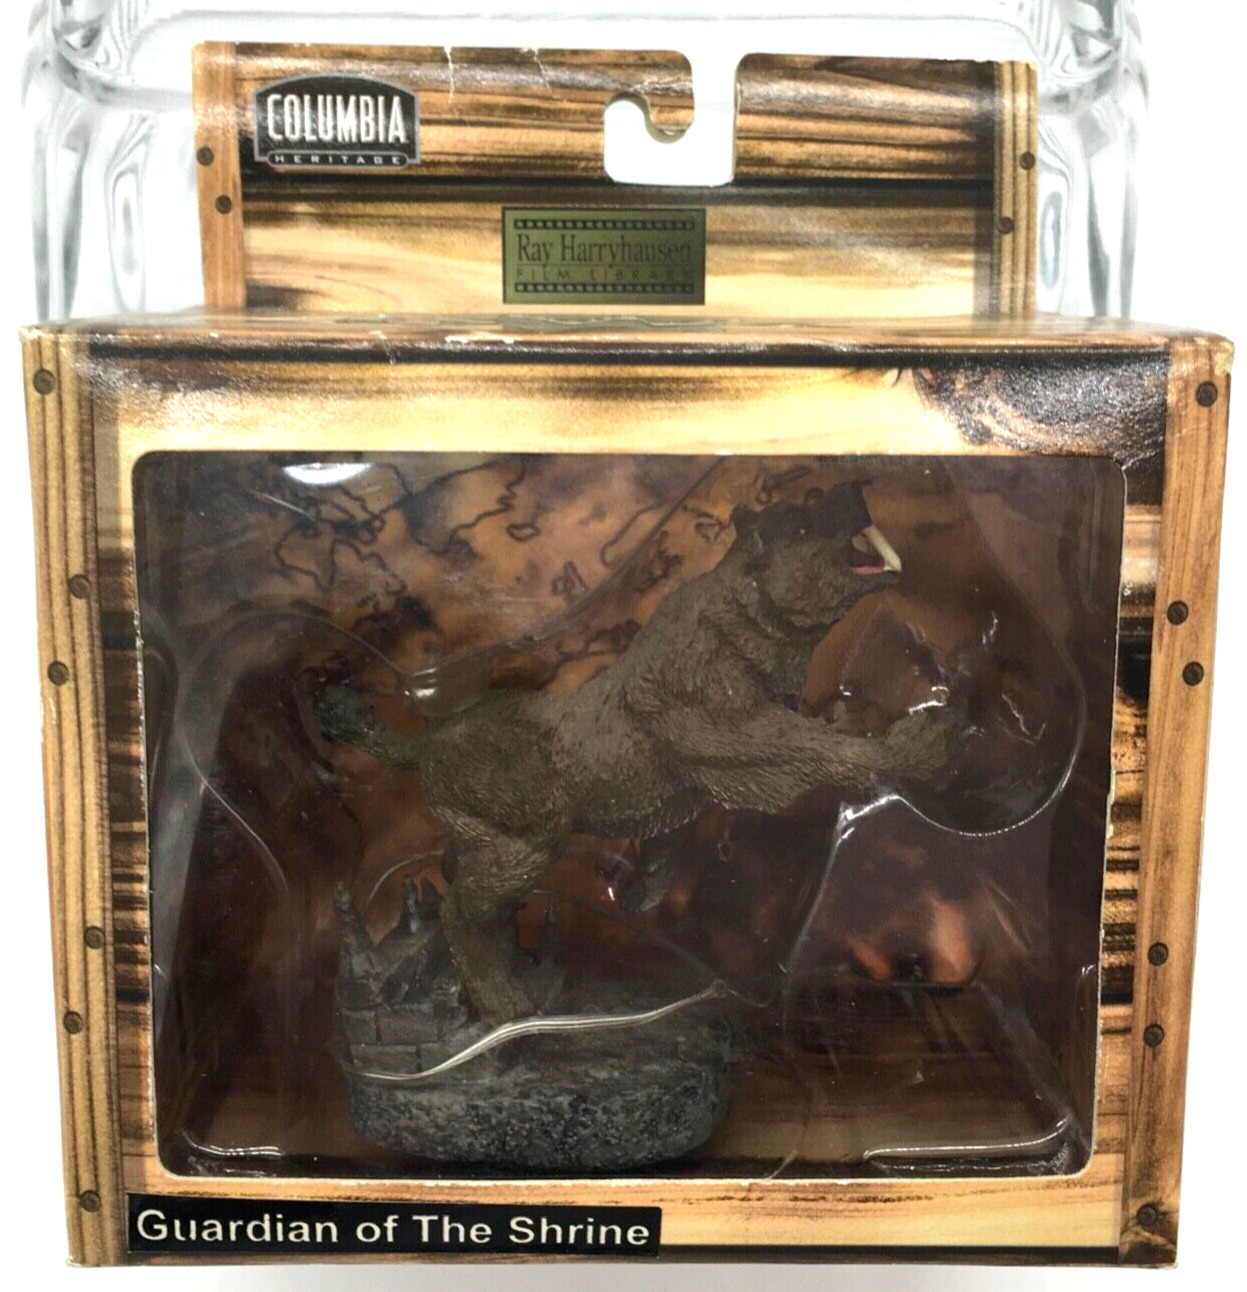 2001 X Plus Ray Harryhausen Guardian Of The Shrine Film Library Resin Figurine